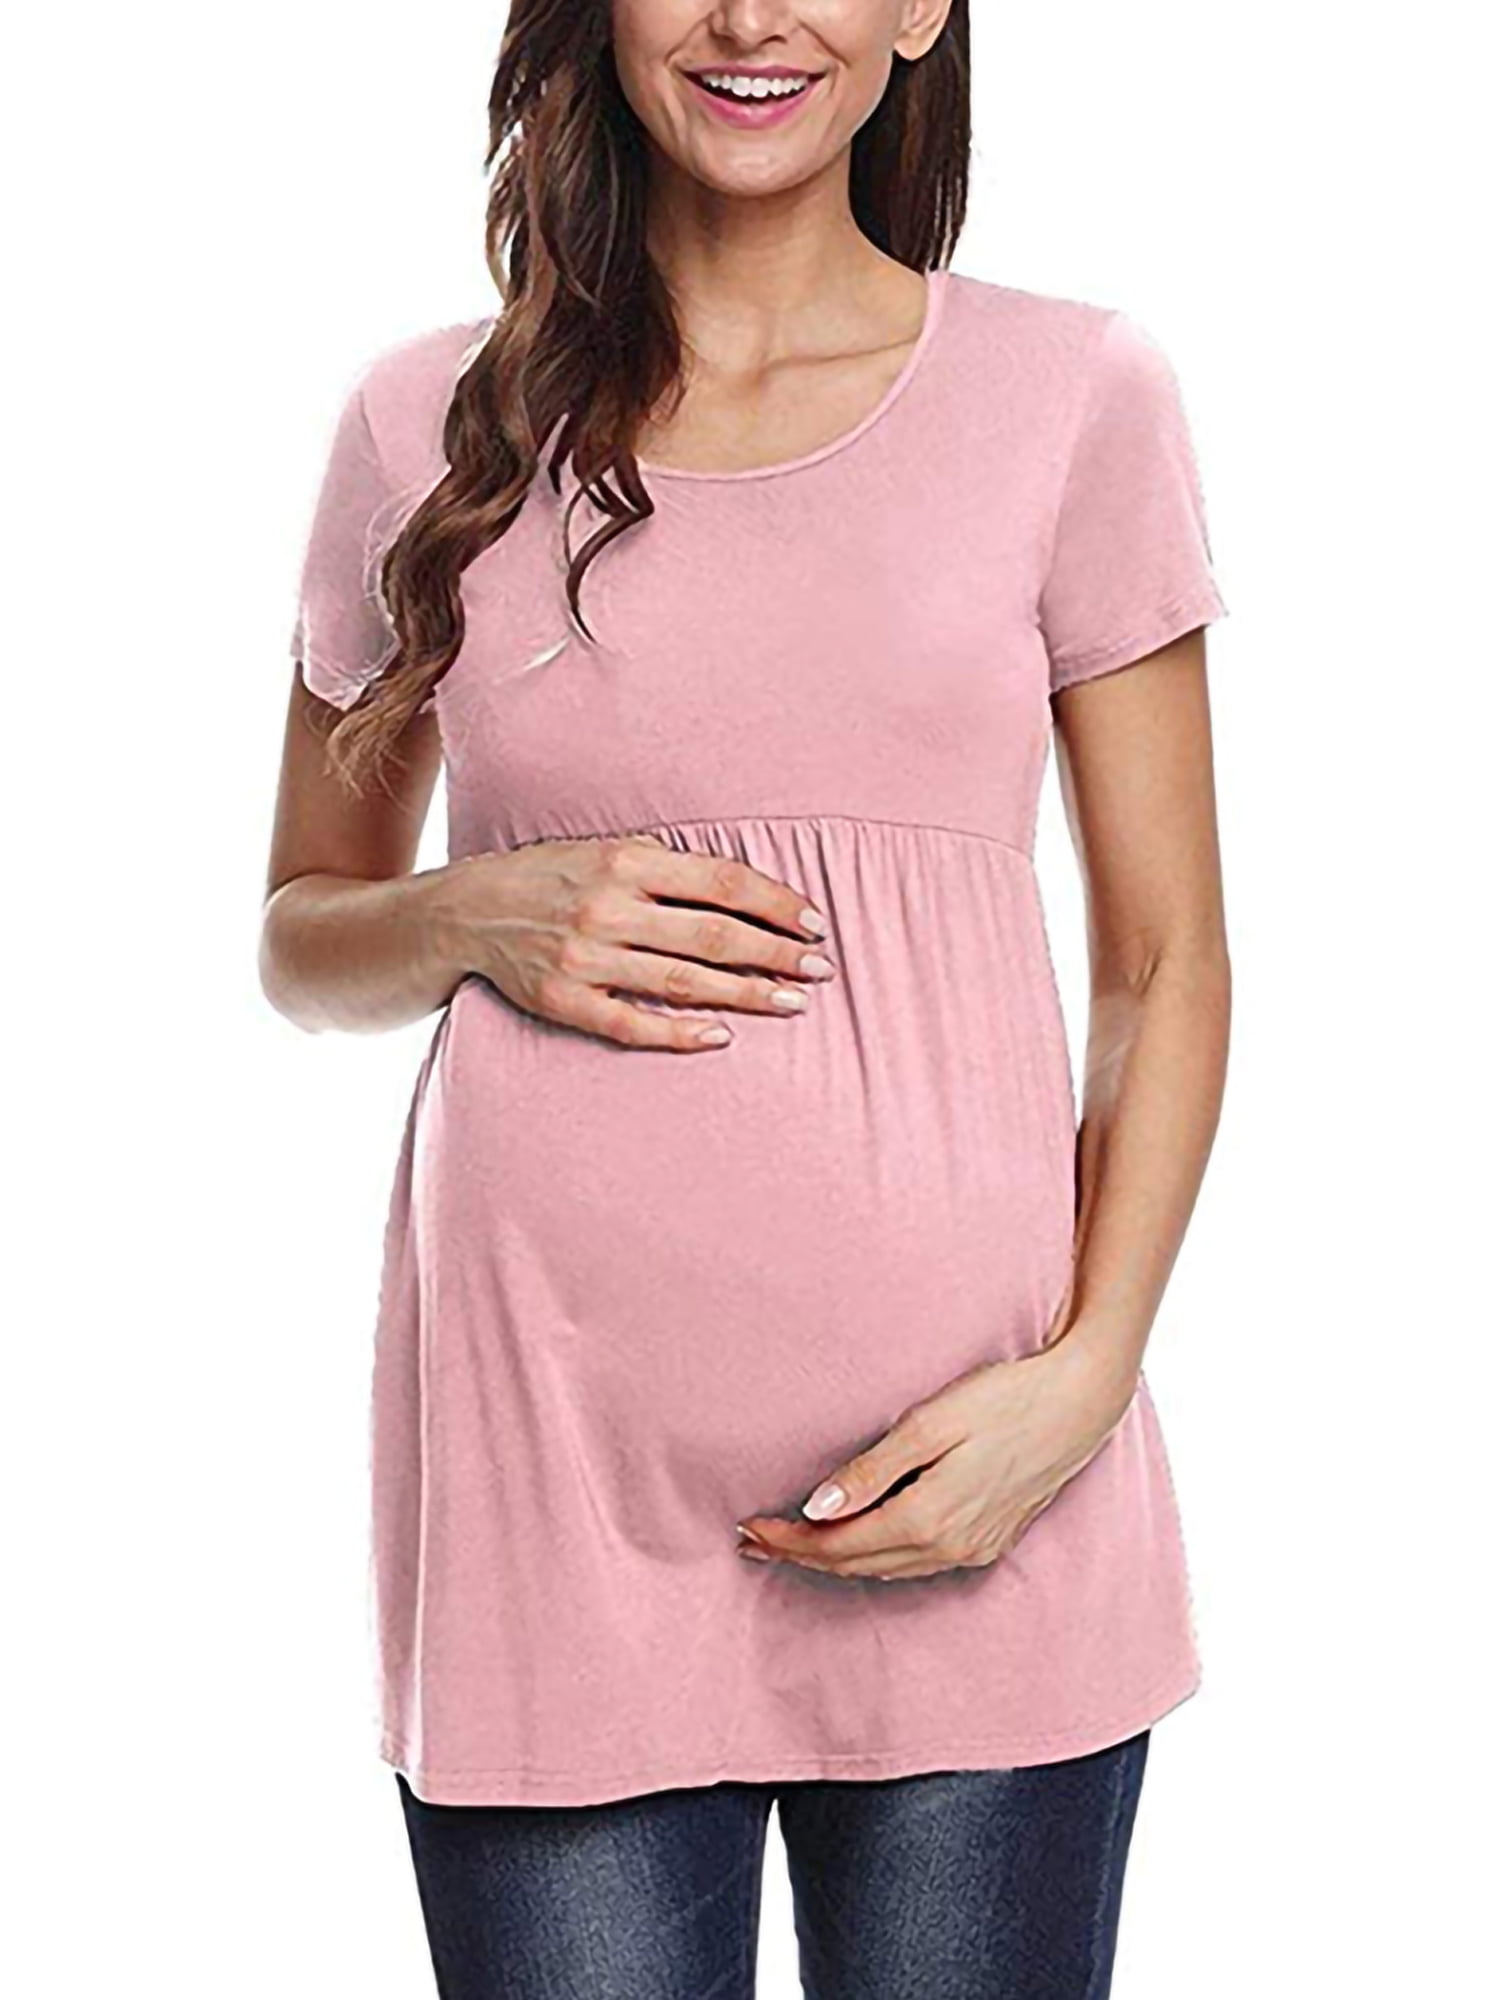 Jezero Women's Nursing Tops 3 Packs for Breastfeeding Shirts Long Sleeve V Neck Maternity Postpartum Clothes 